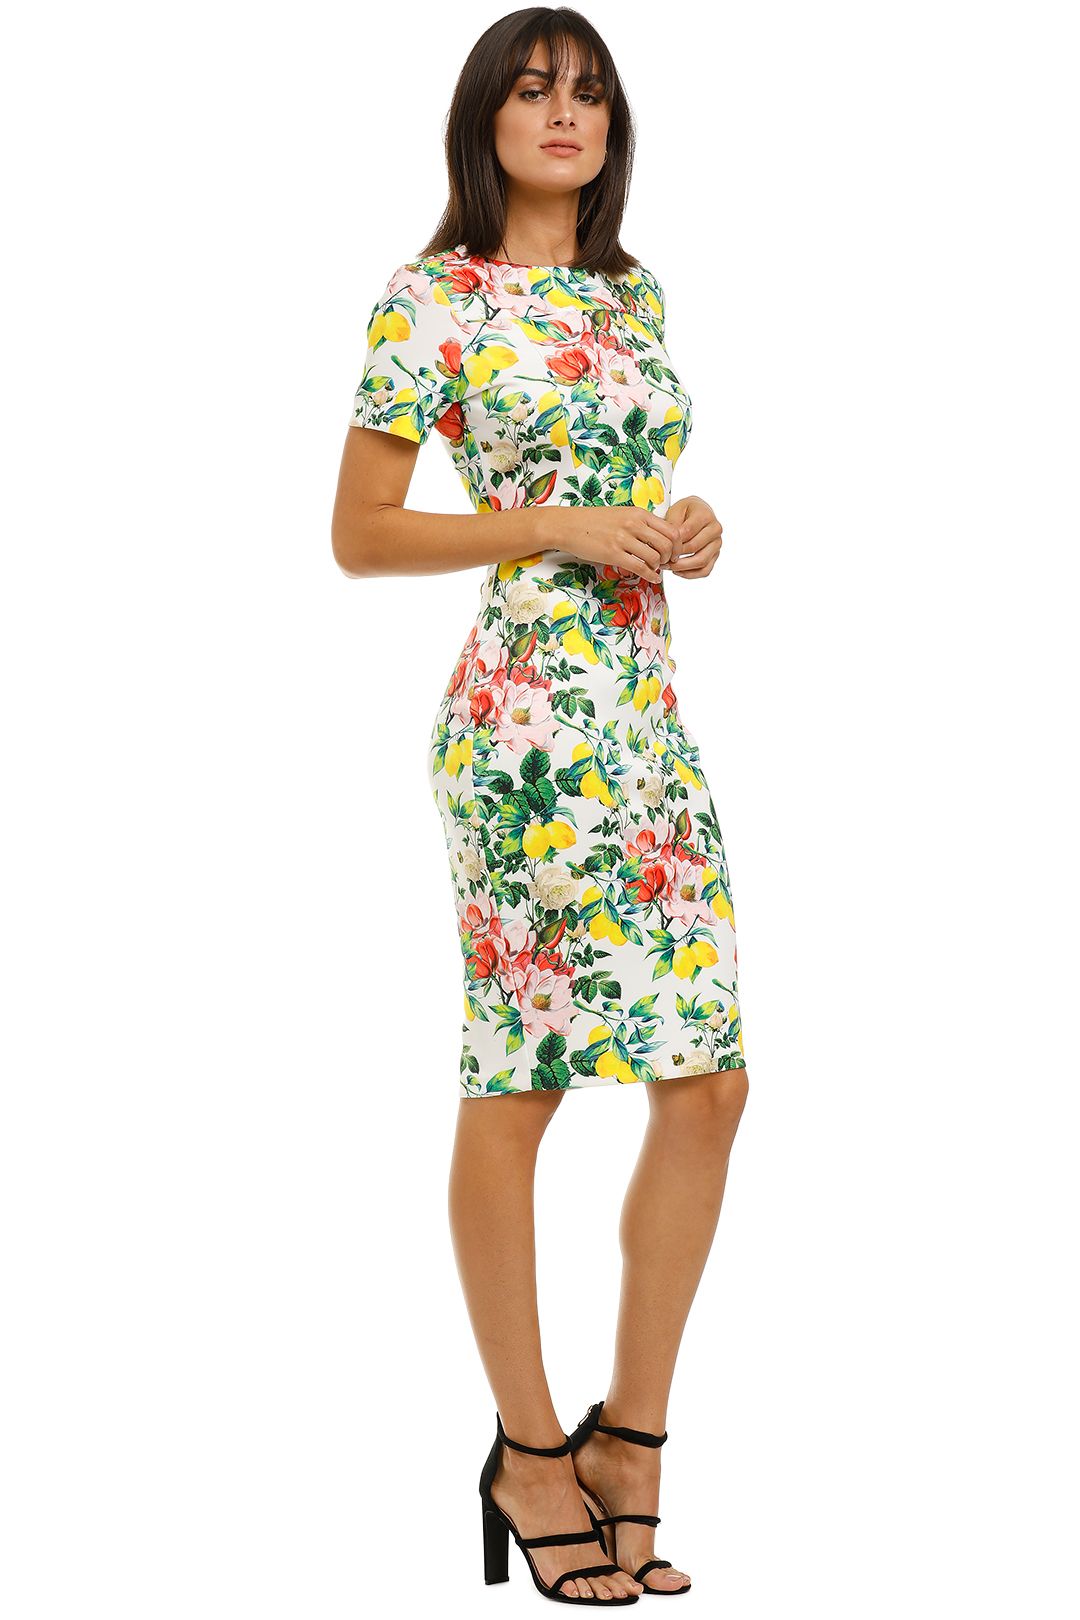 Scuba Sheath Dress in Lemon Floral by Alexia Admor for Rent